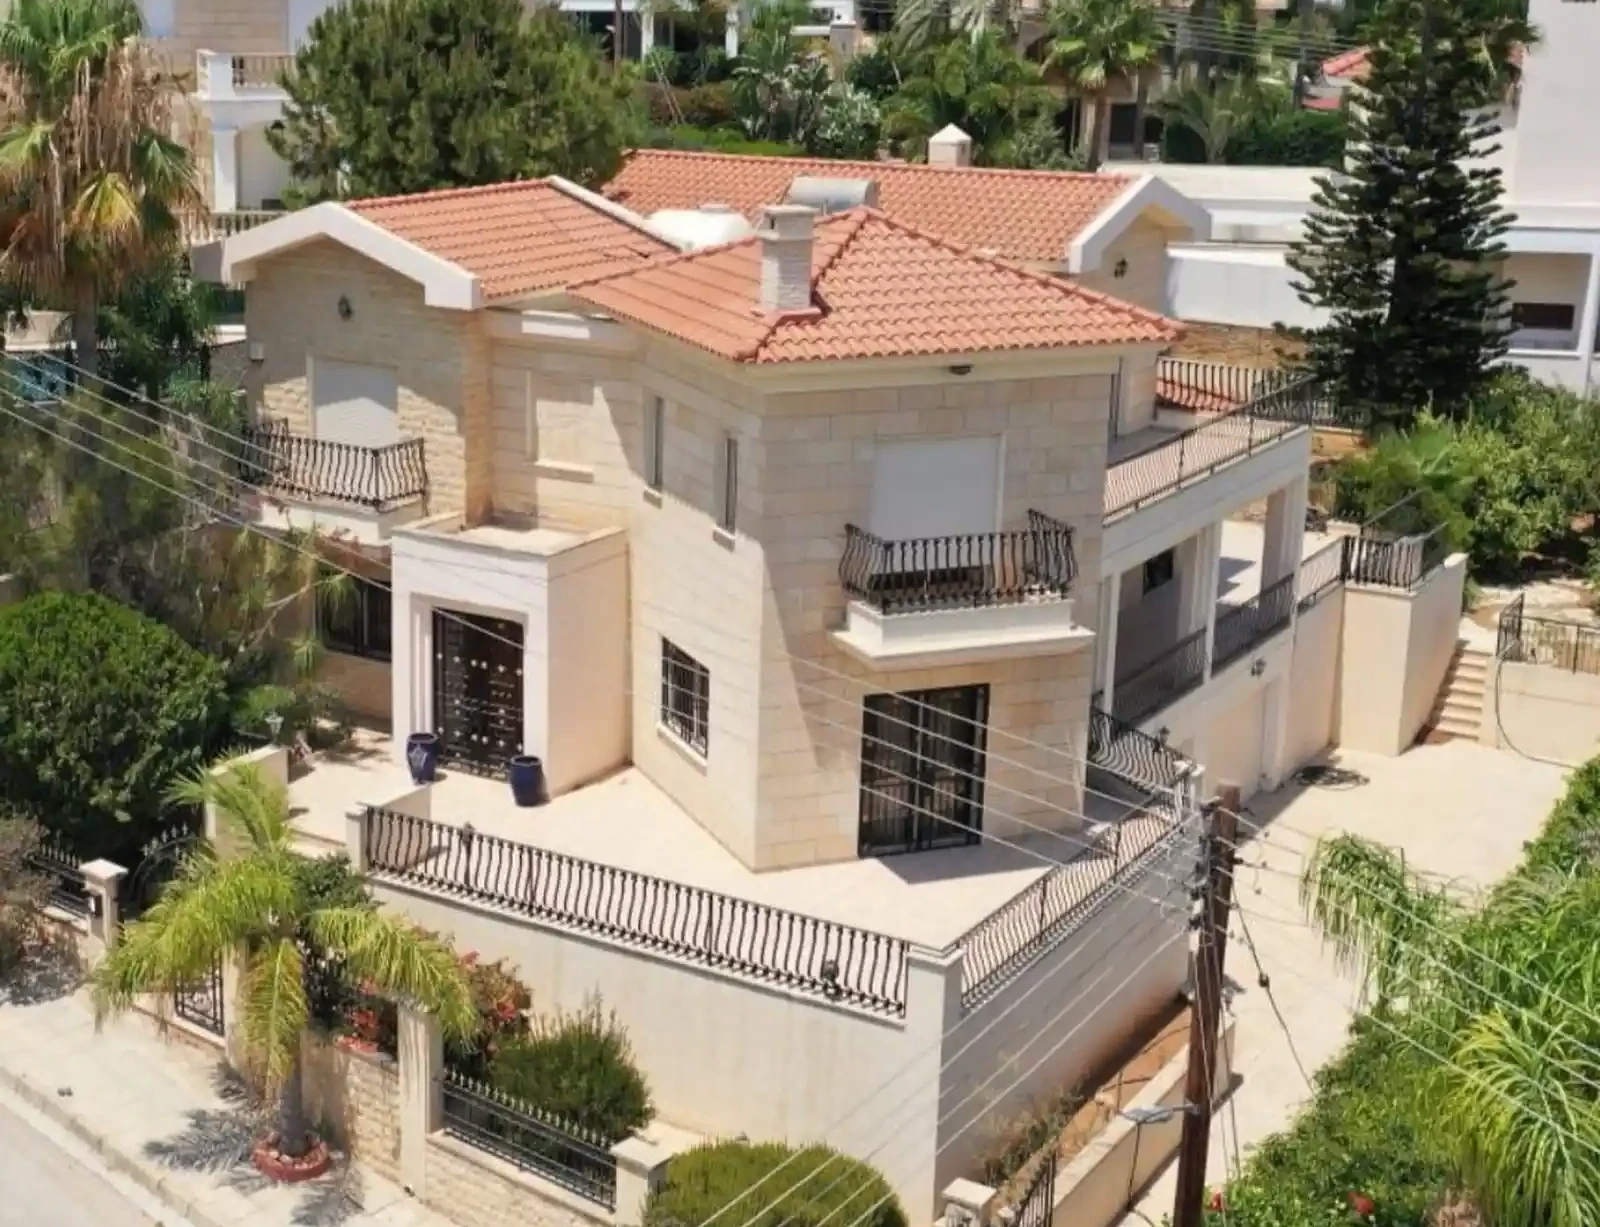 7-bedroom villa fоr sаle €1.400.000, image 1